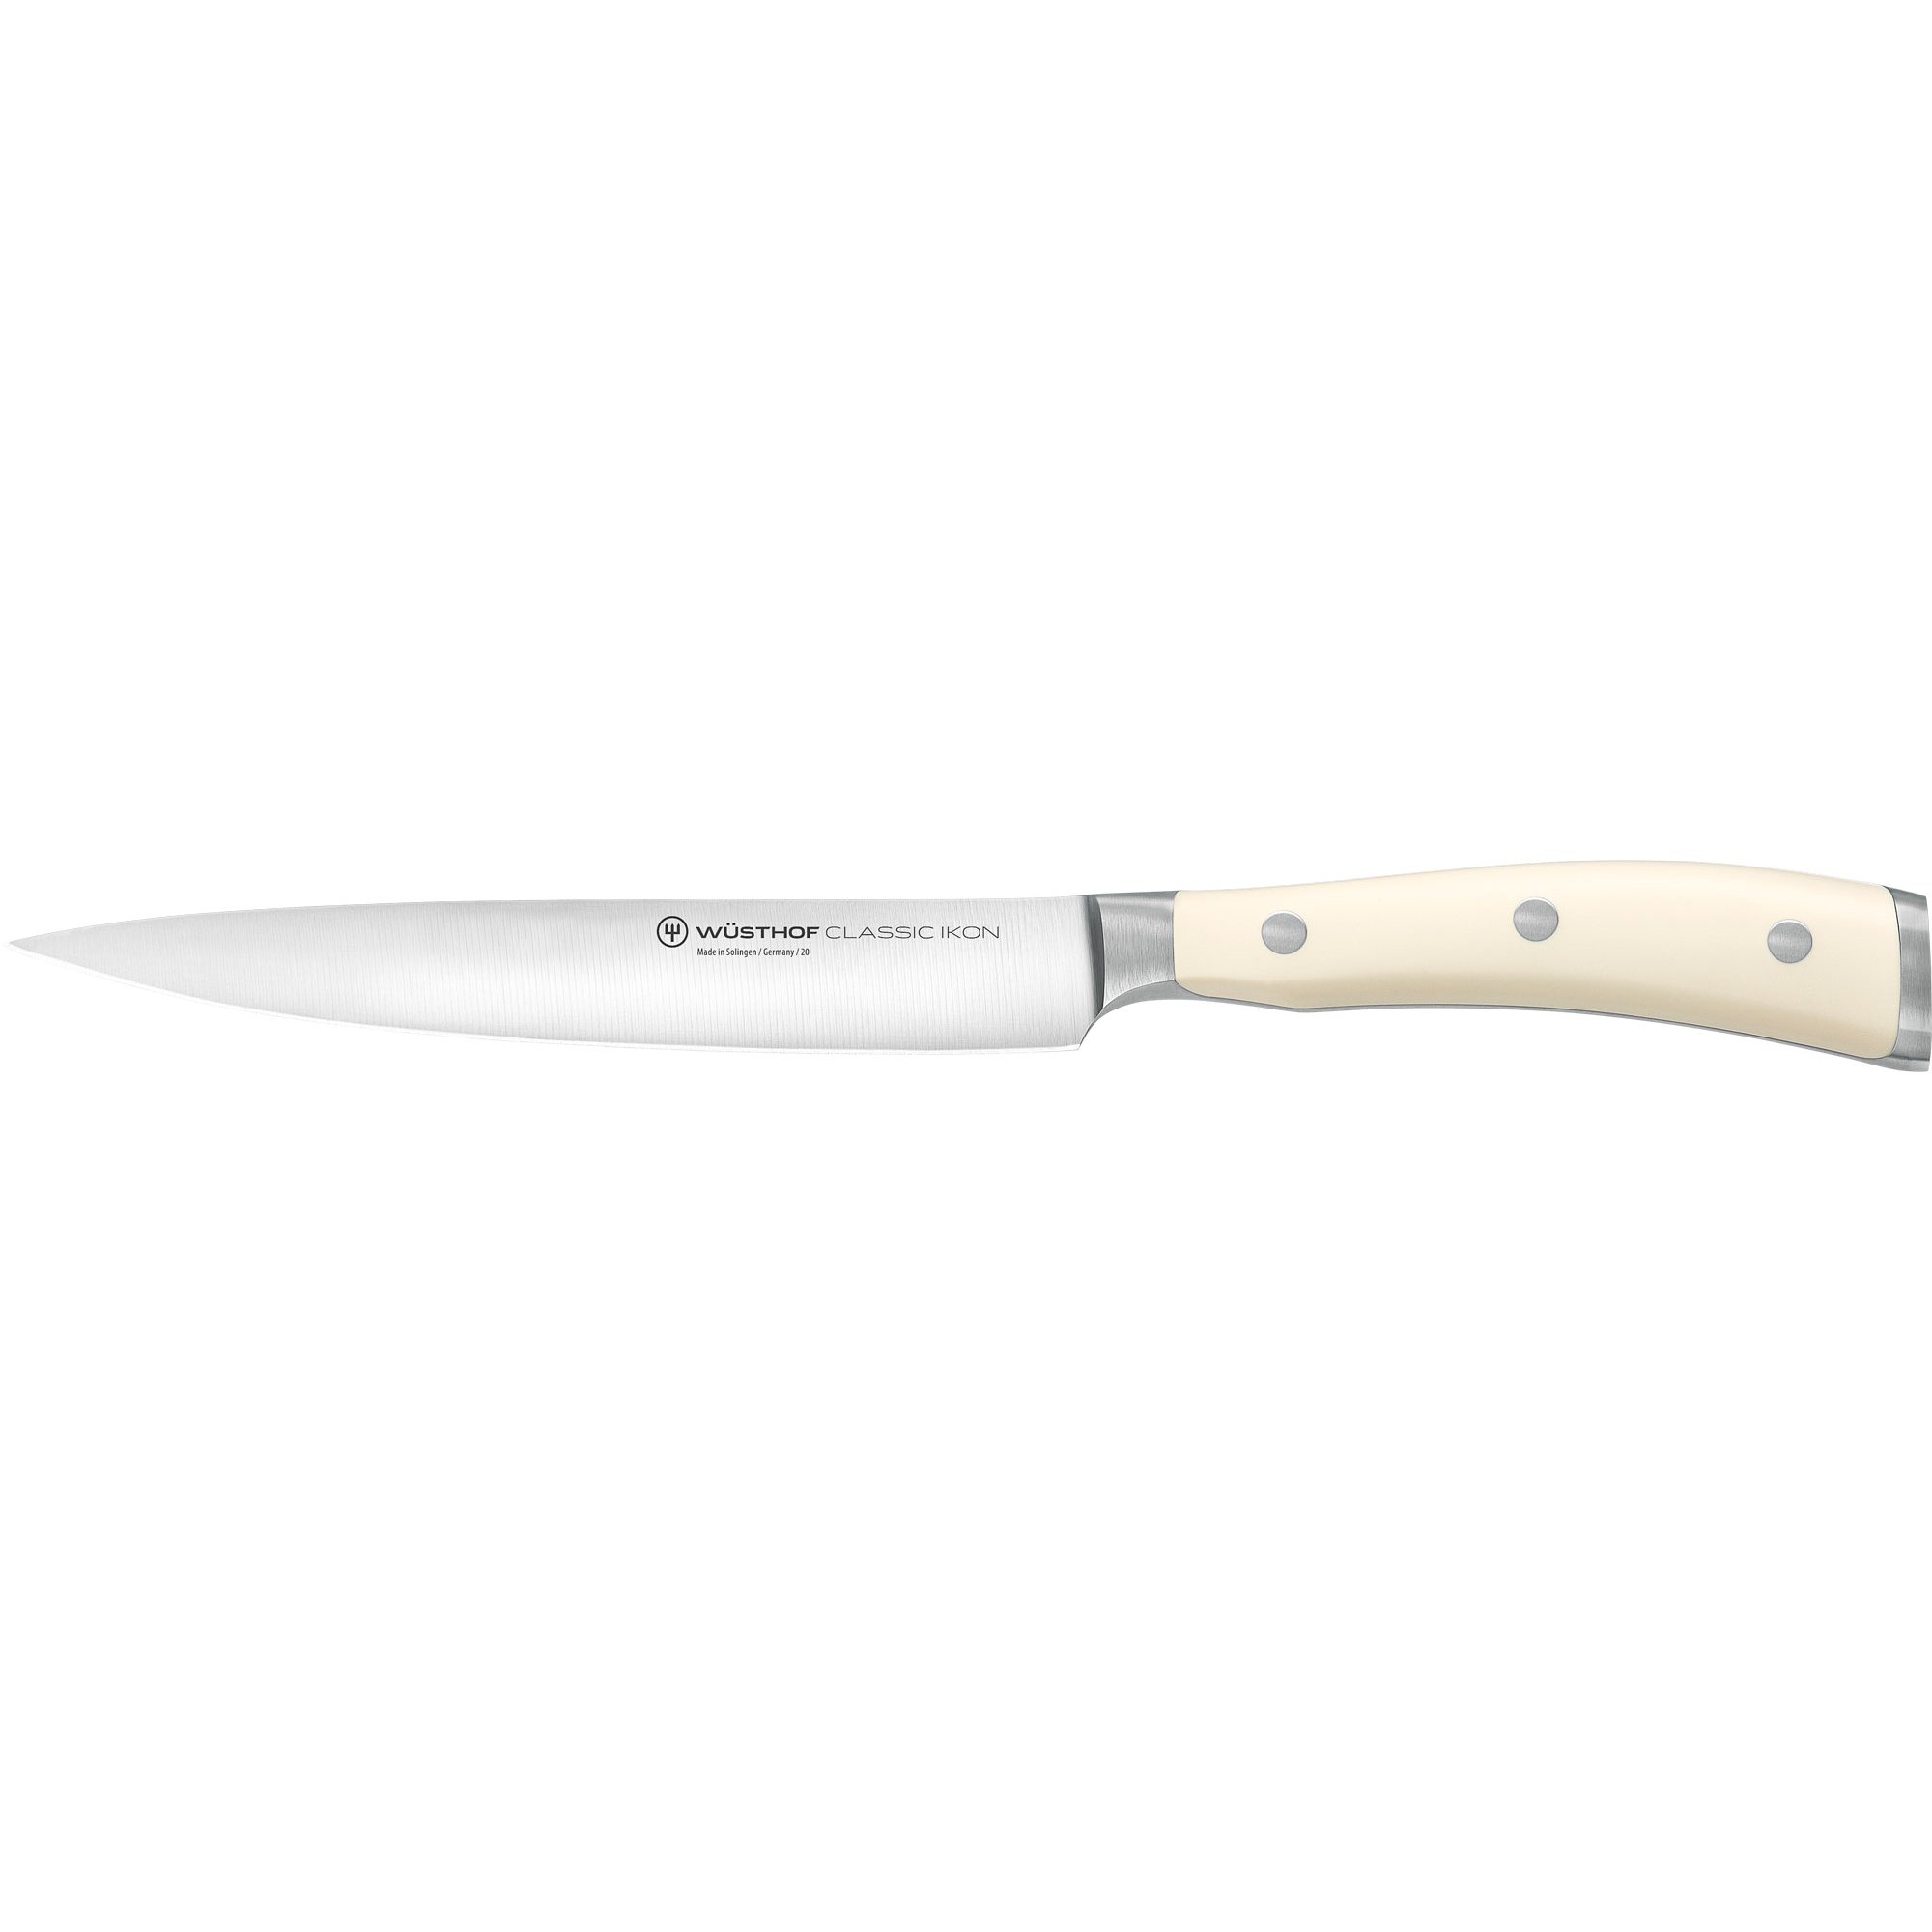 Classic Ikon kødkniv hvid 16 cm.